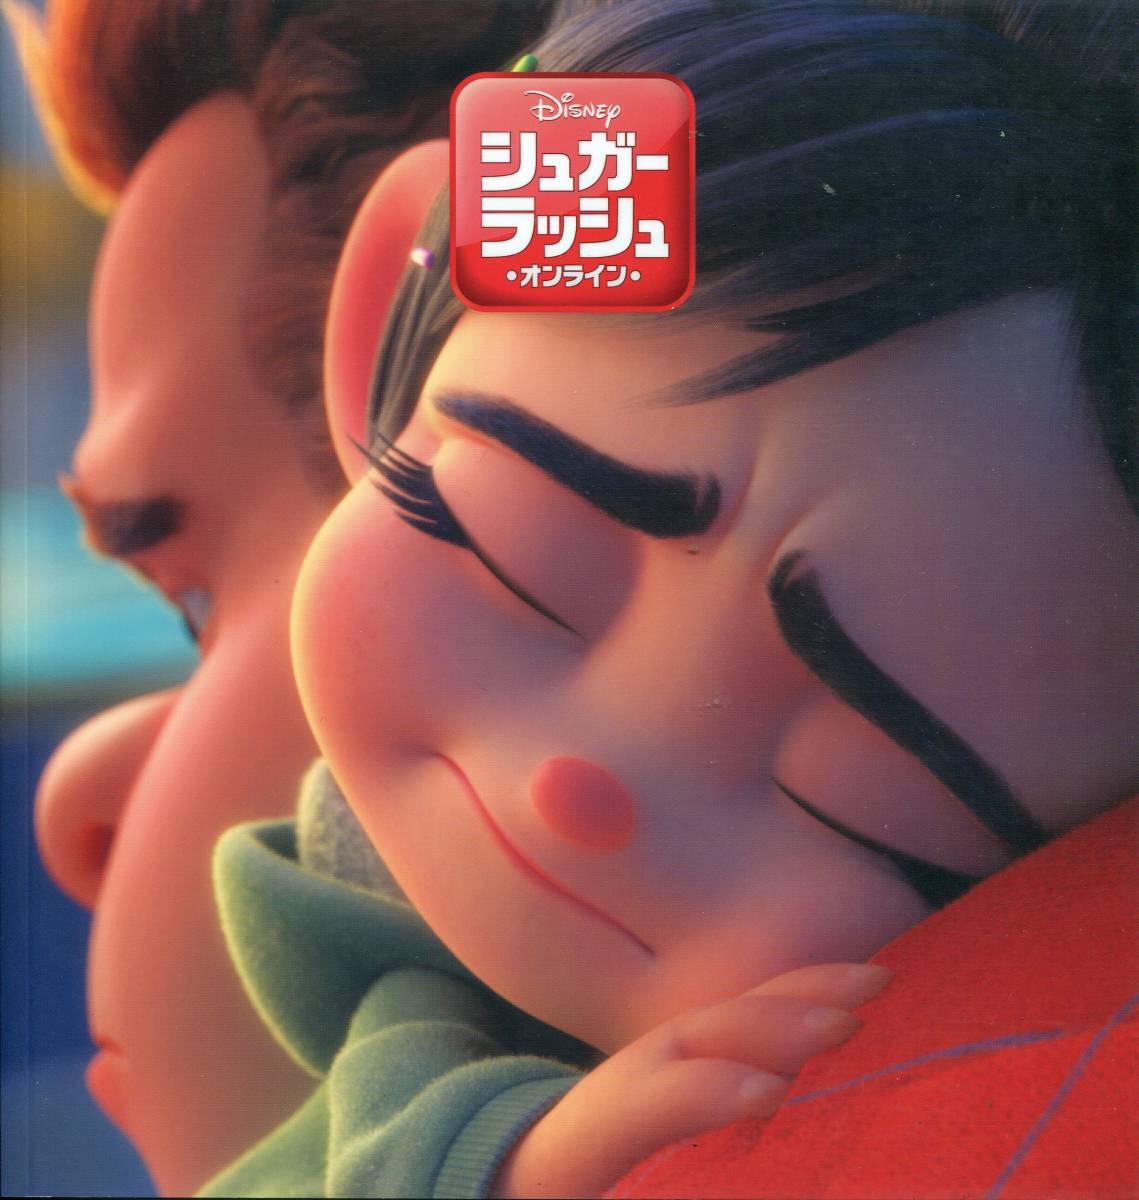 shuga-* Rush online pamphlet & leaflet * Disney work movie shuga- Rush pamphlet Flyer set *aoaoya